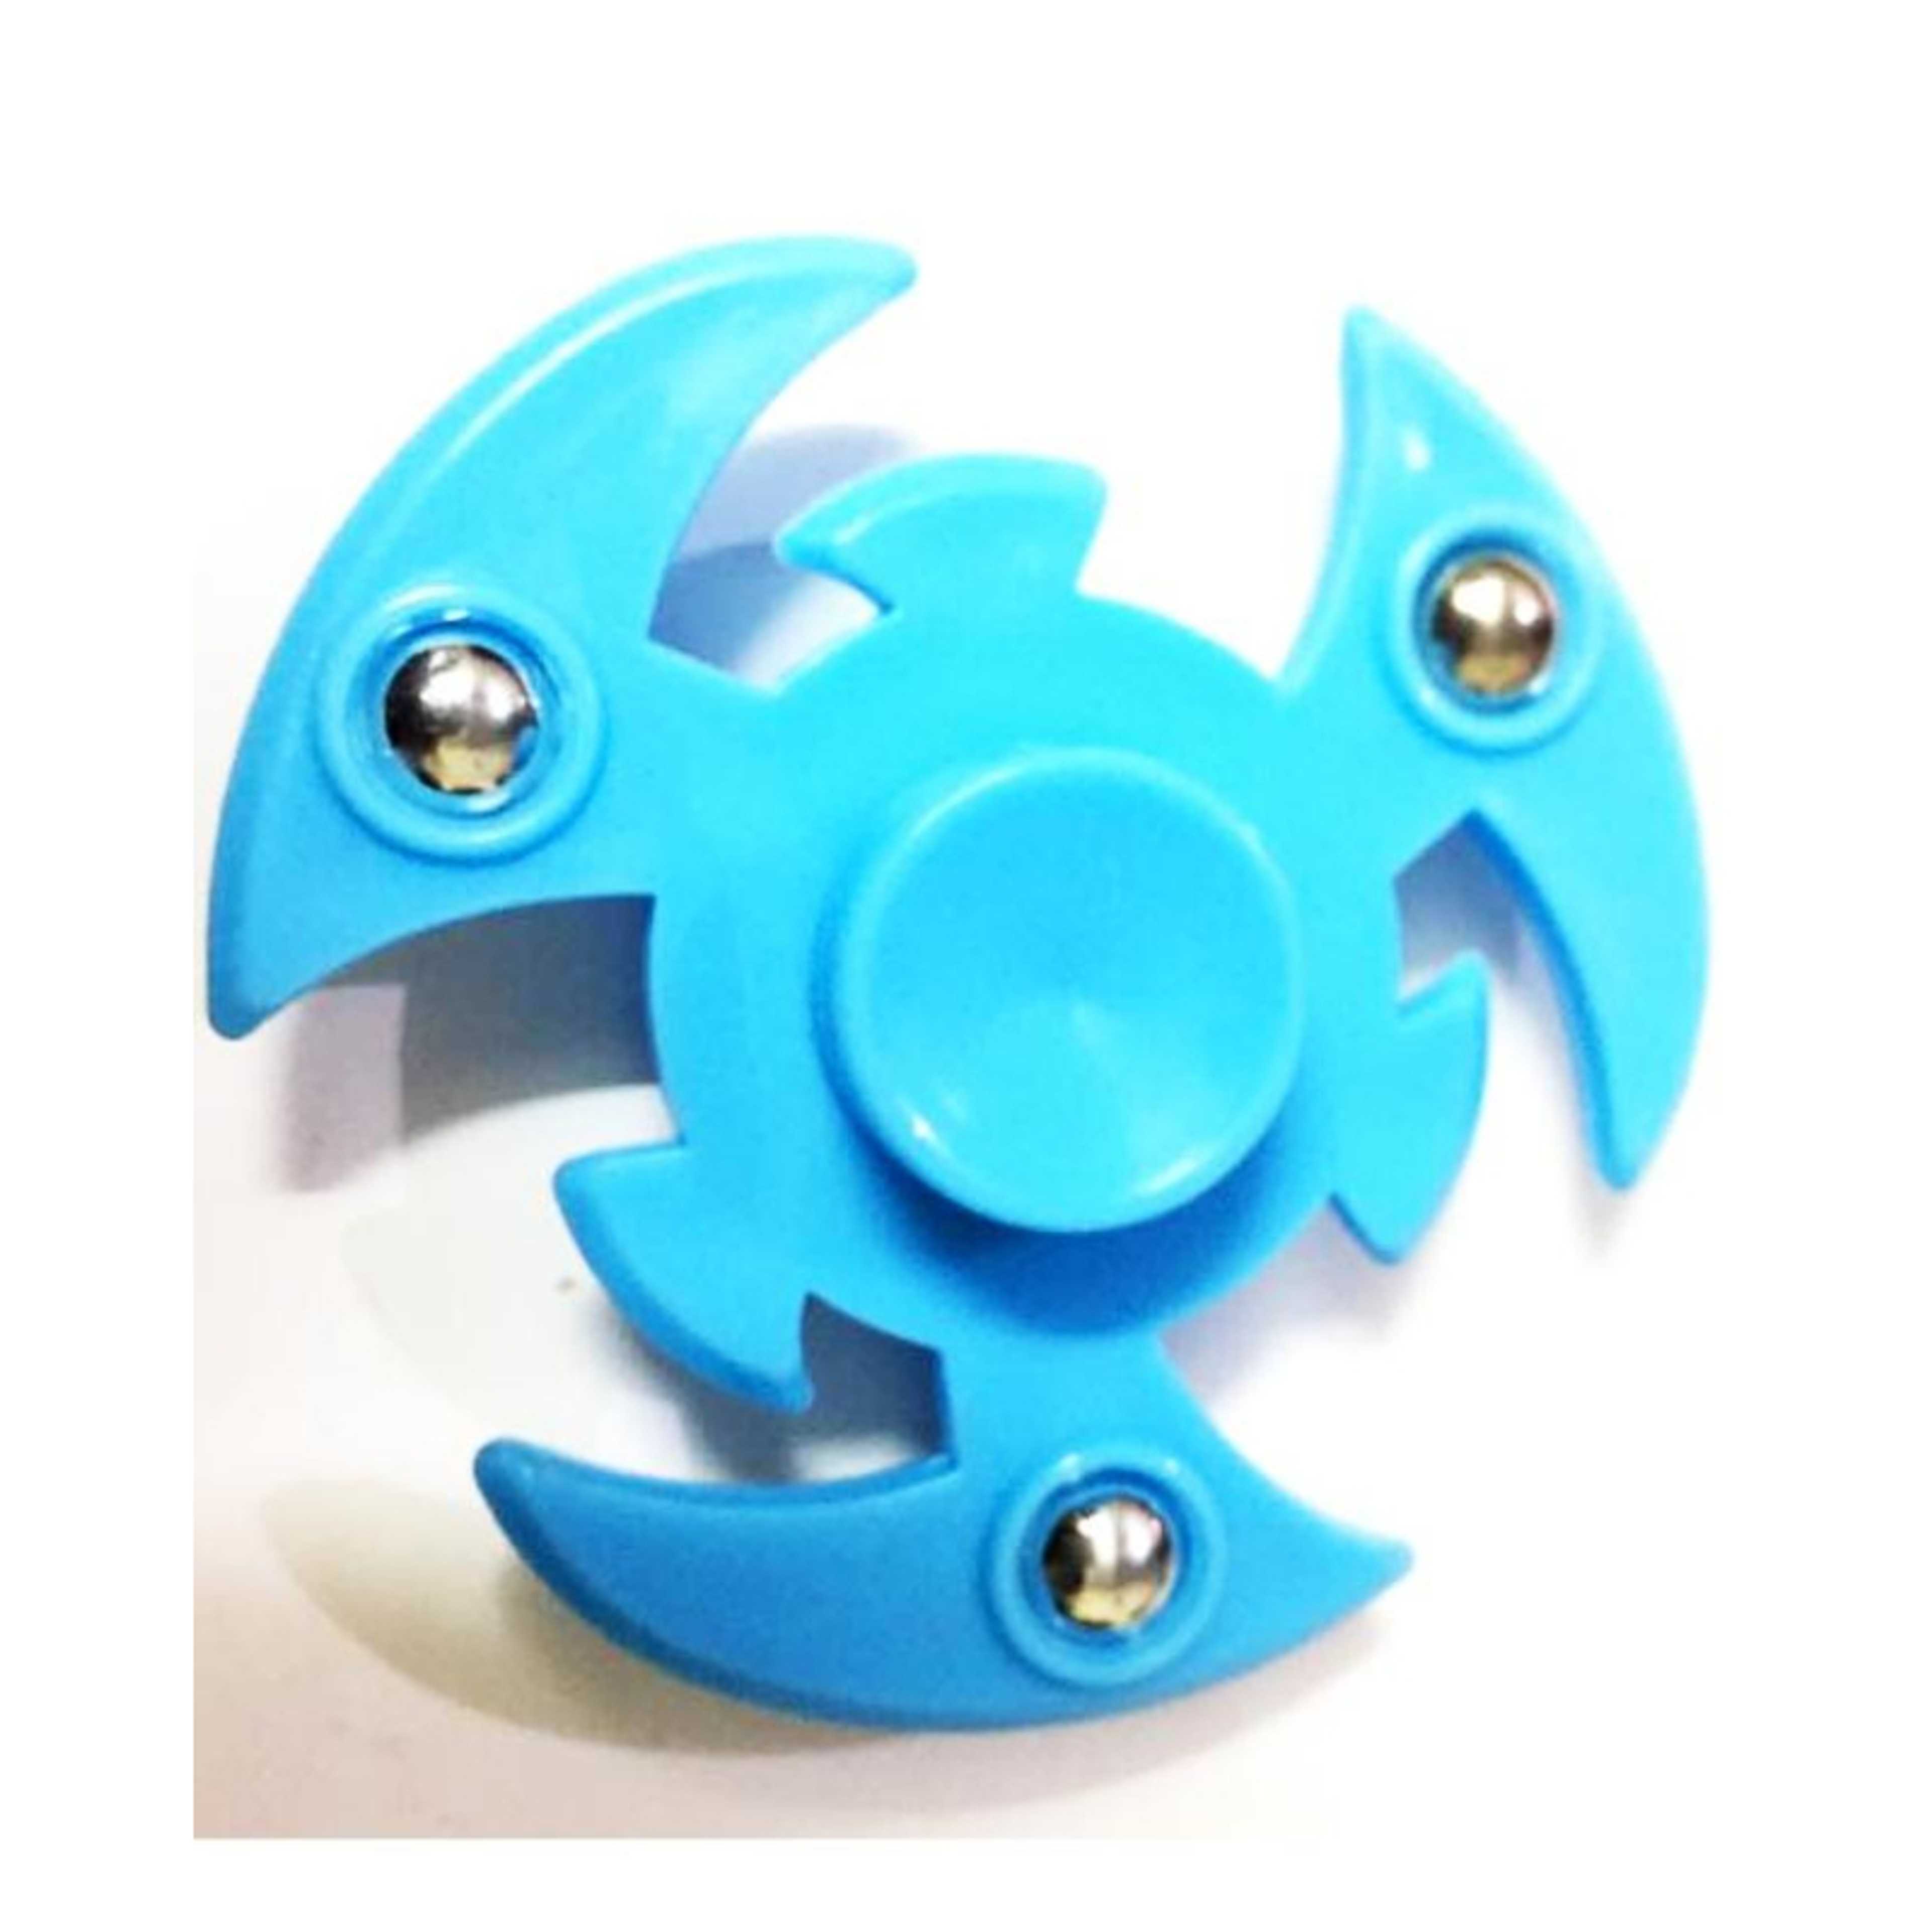 Tri-Ninja Fidget Spinner - Blue